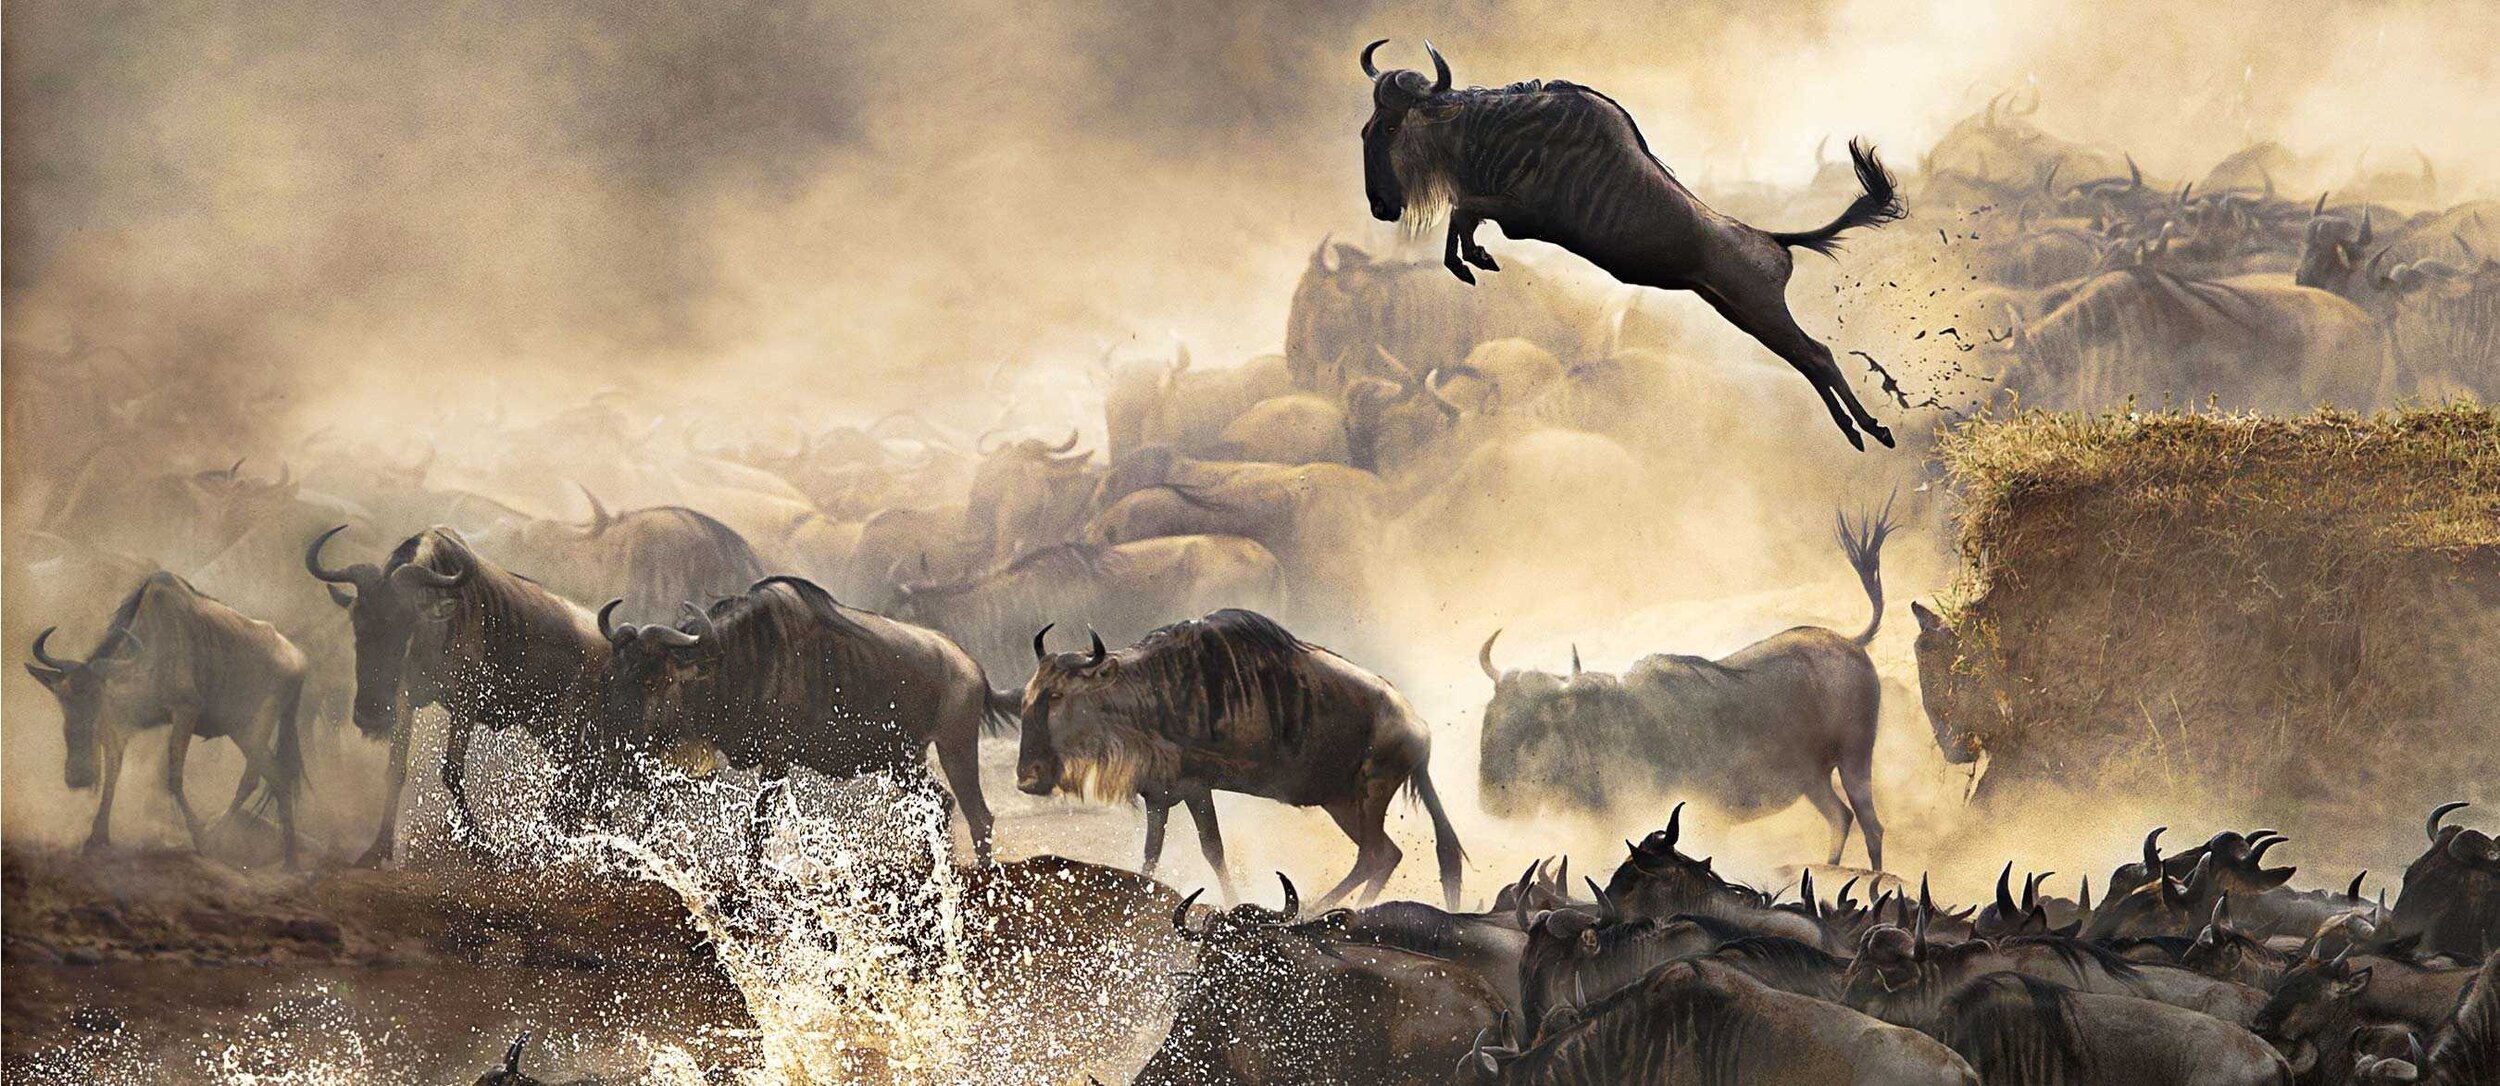 wildebeests-migration-safari.jpeg